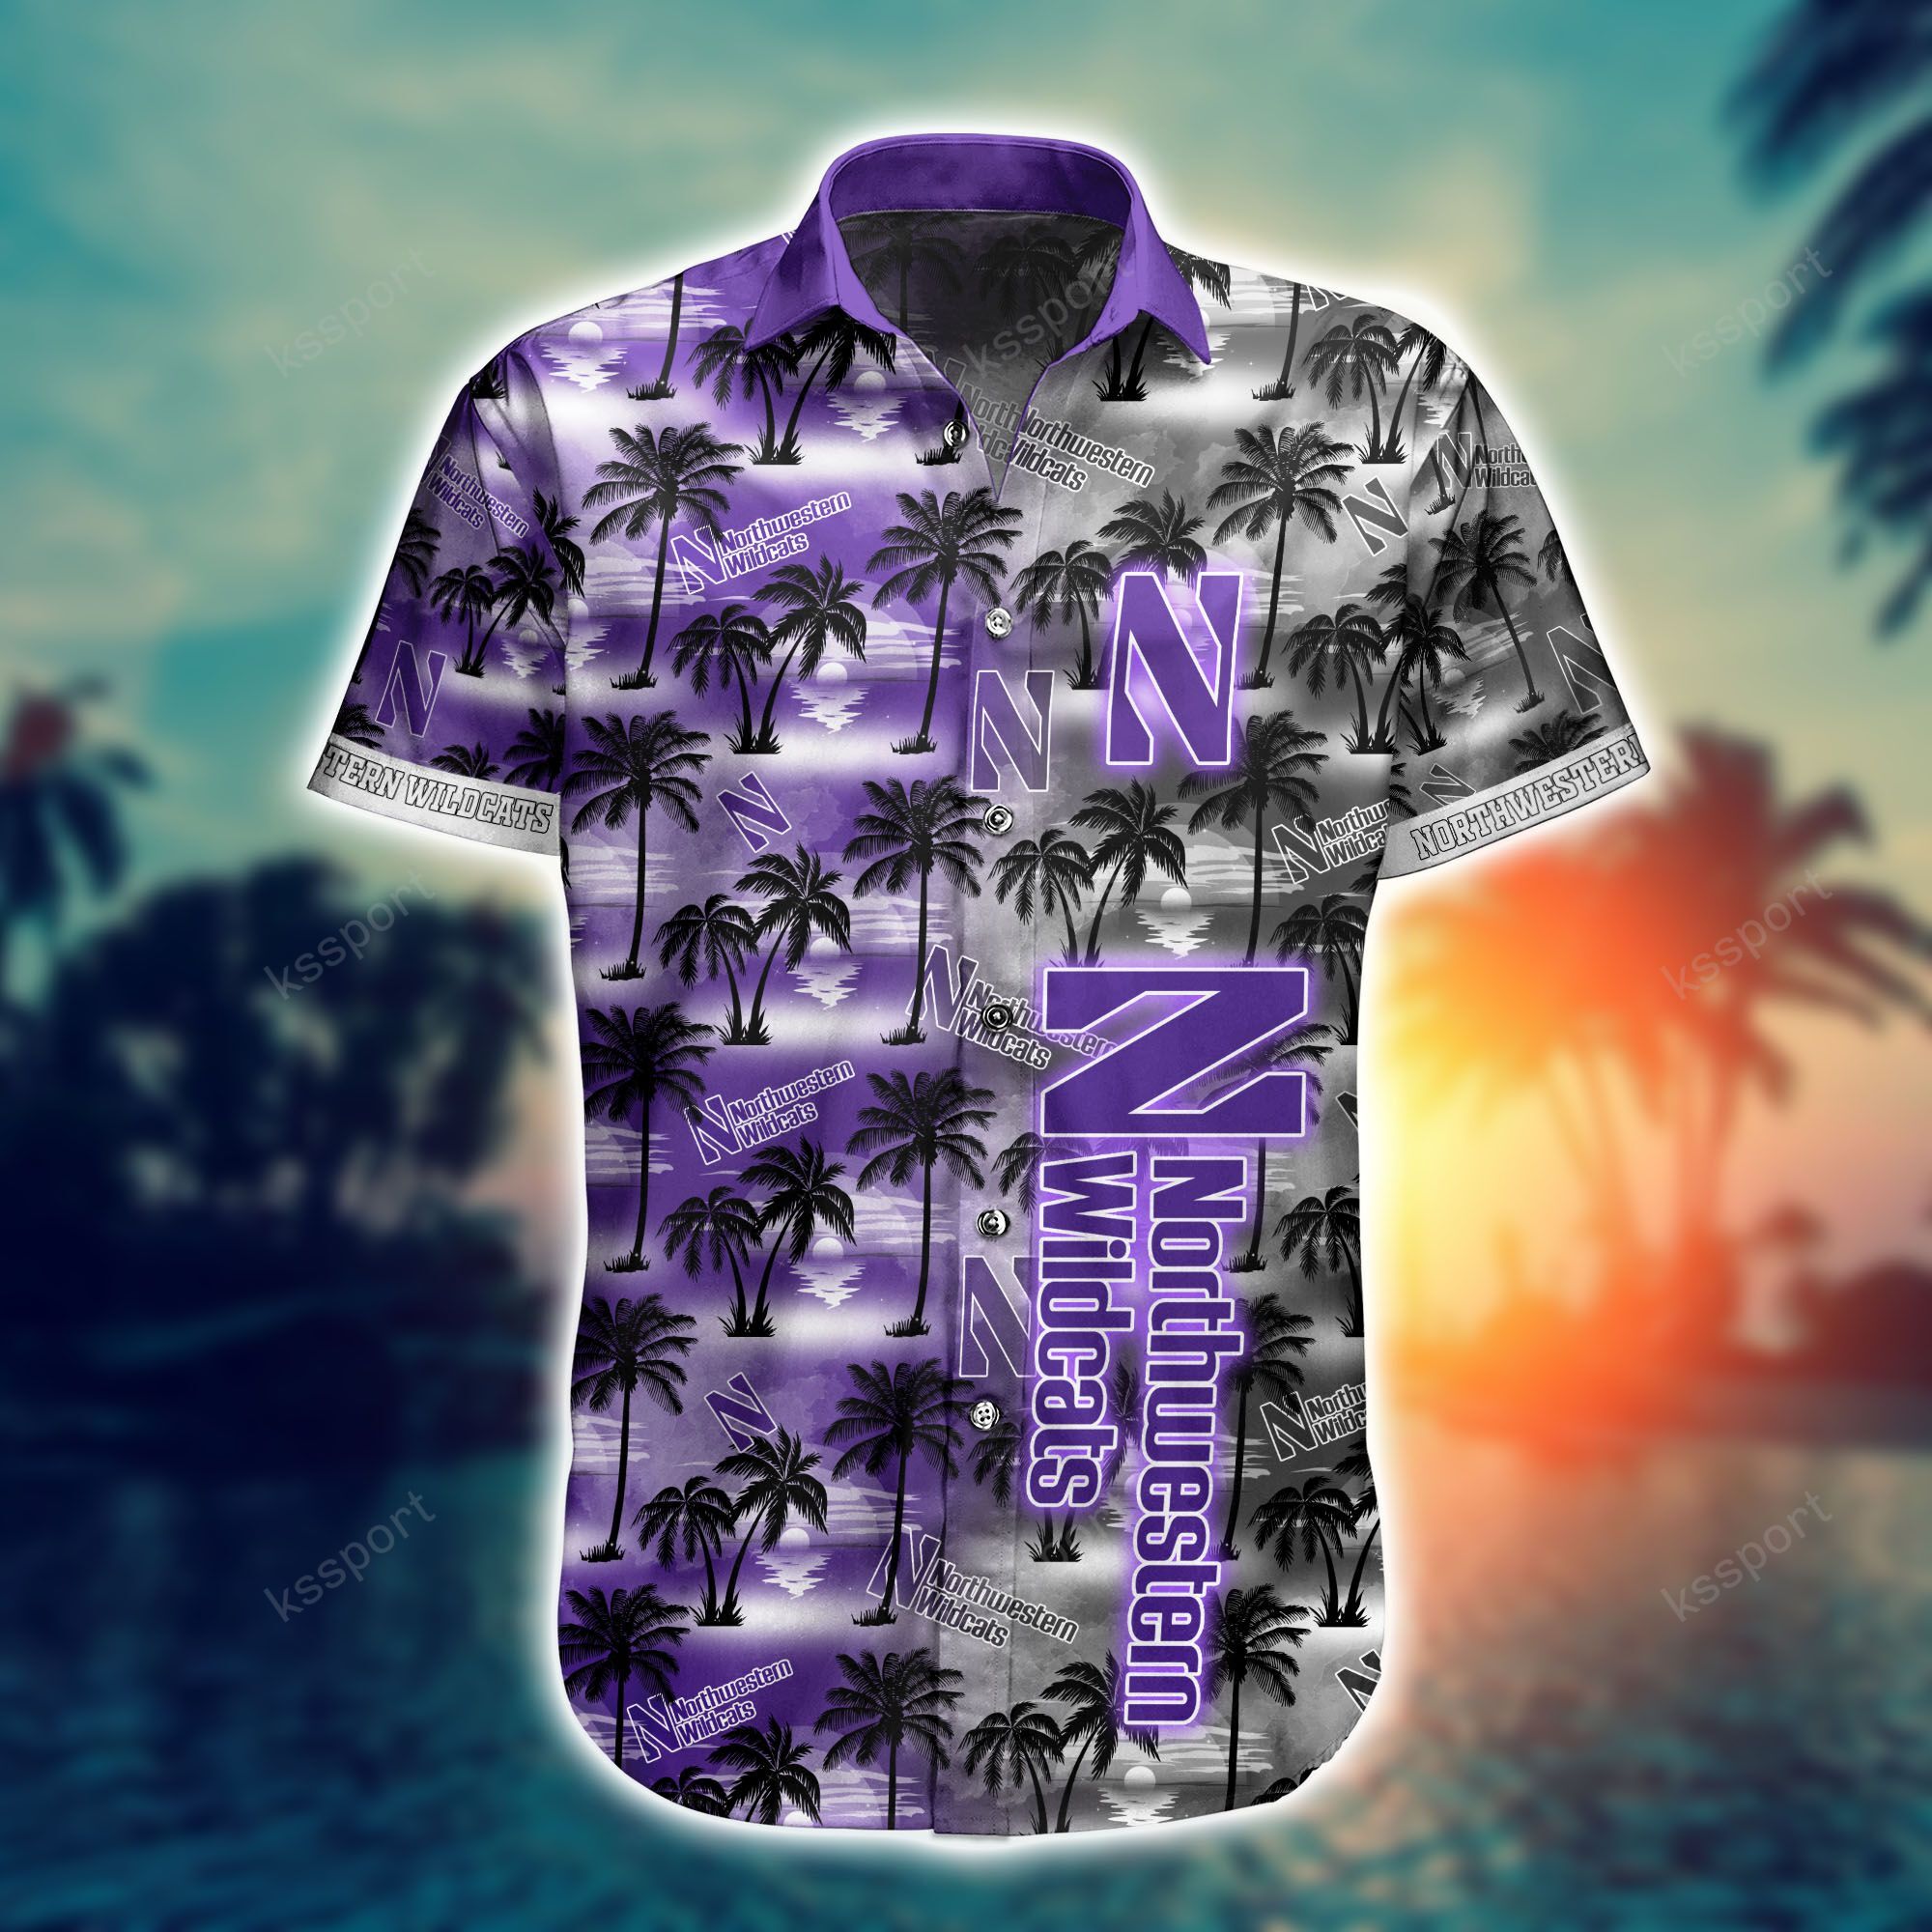 Hawaiian shirt and shorts is a great way to look stylish at a beach party 86